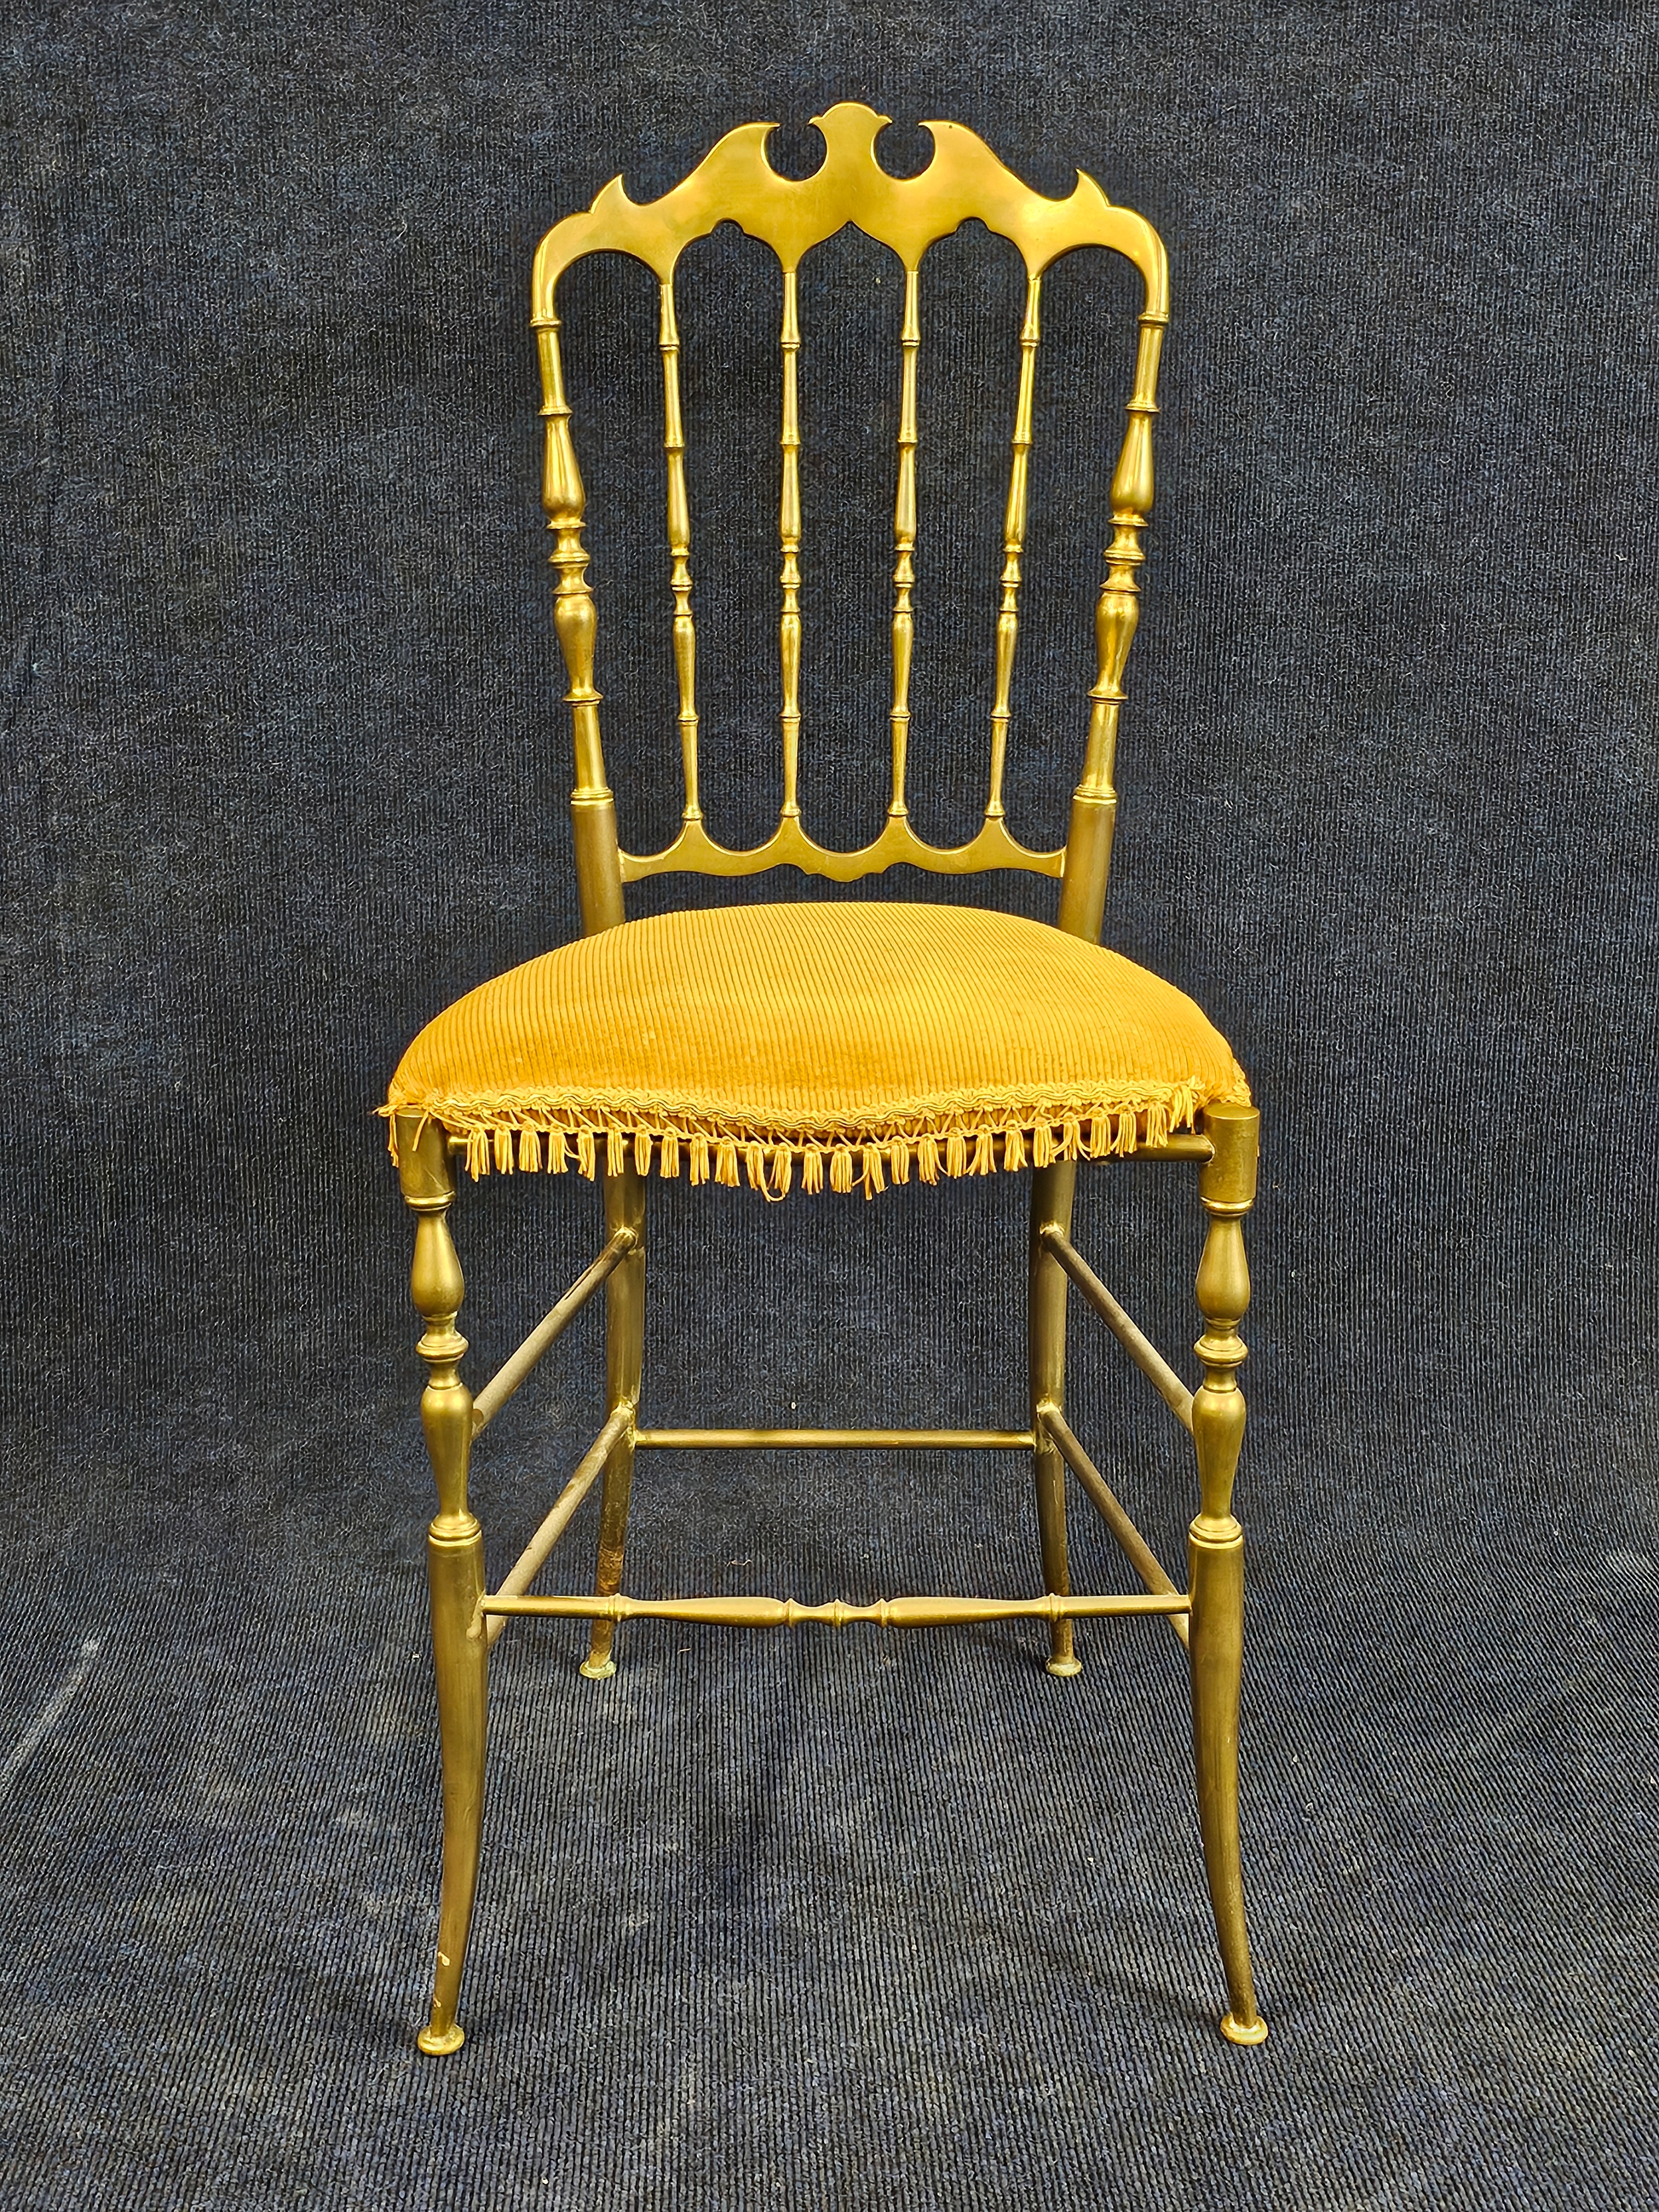 A brass salon chair - Image 7 of 8